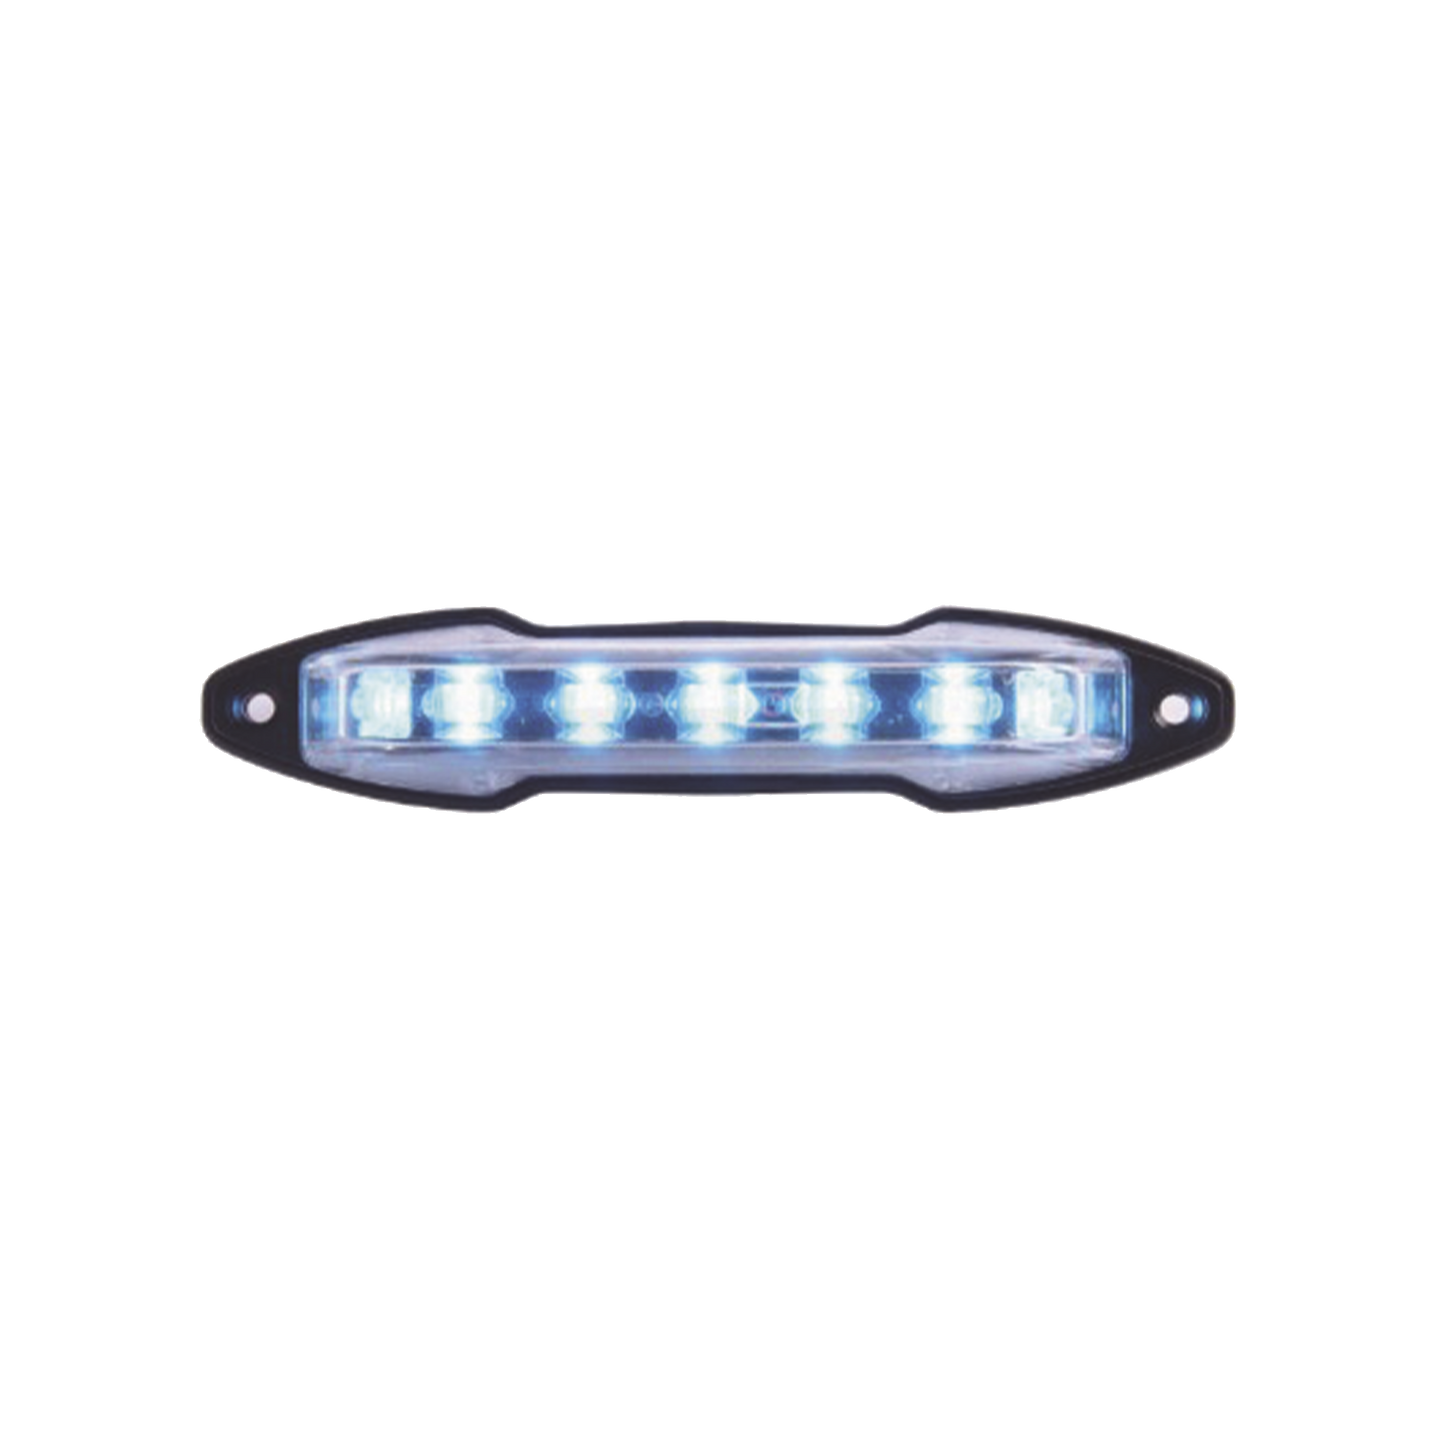 Luz auxiliar con 9 LED color azul angulo de 180 grados